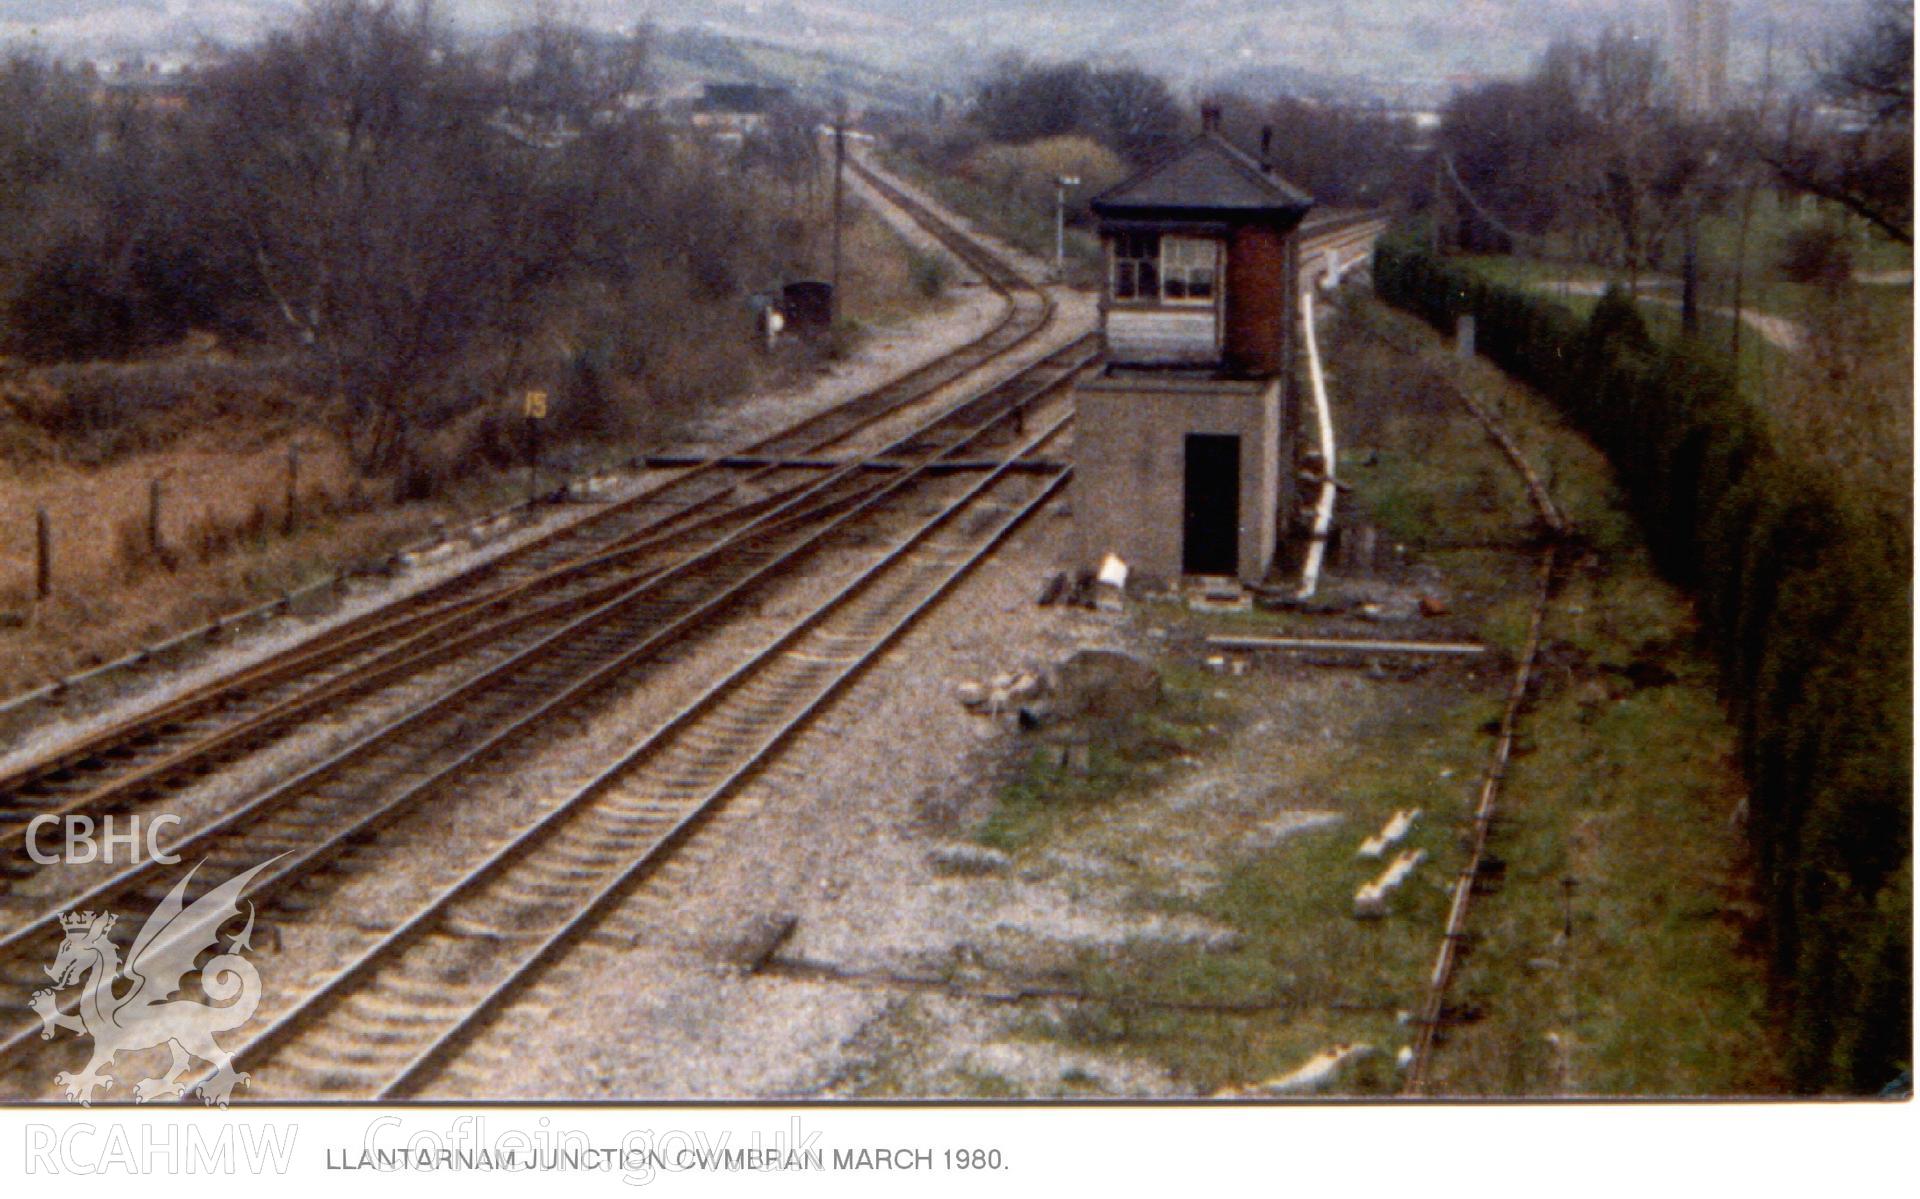 Digital photograph showing Llantarnam Junction and signal box, taken 1980.